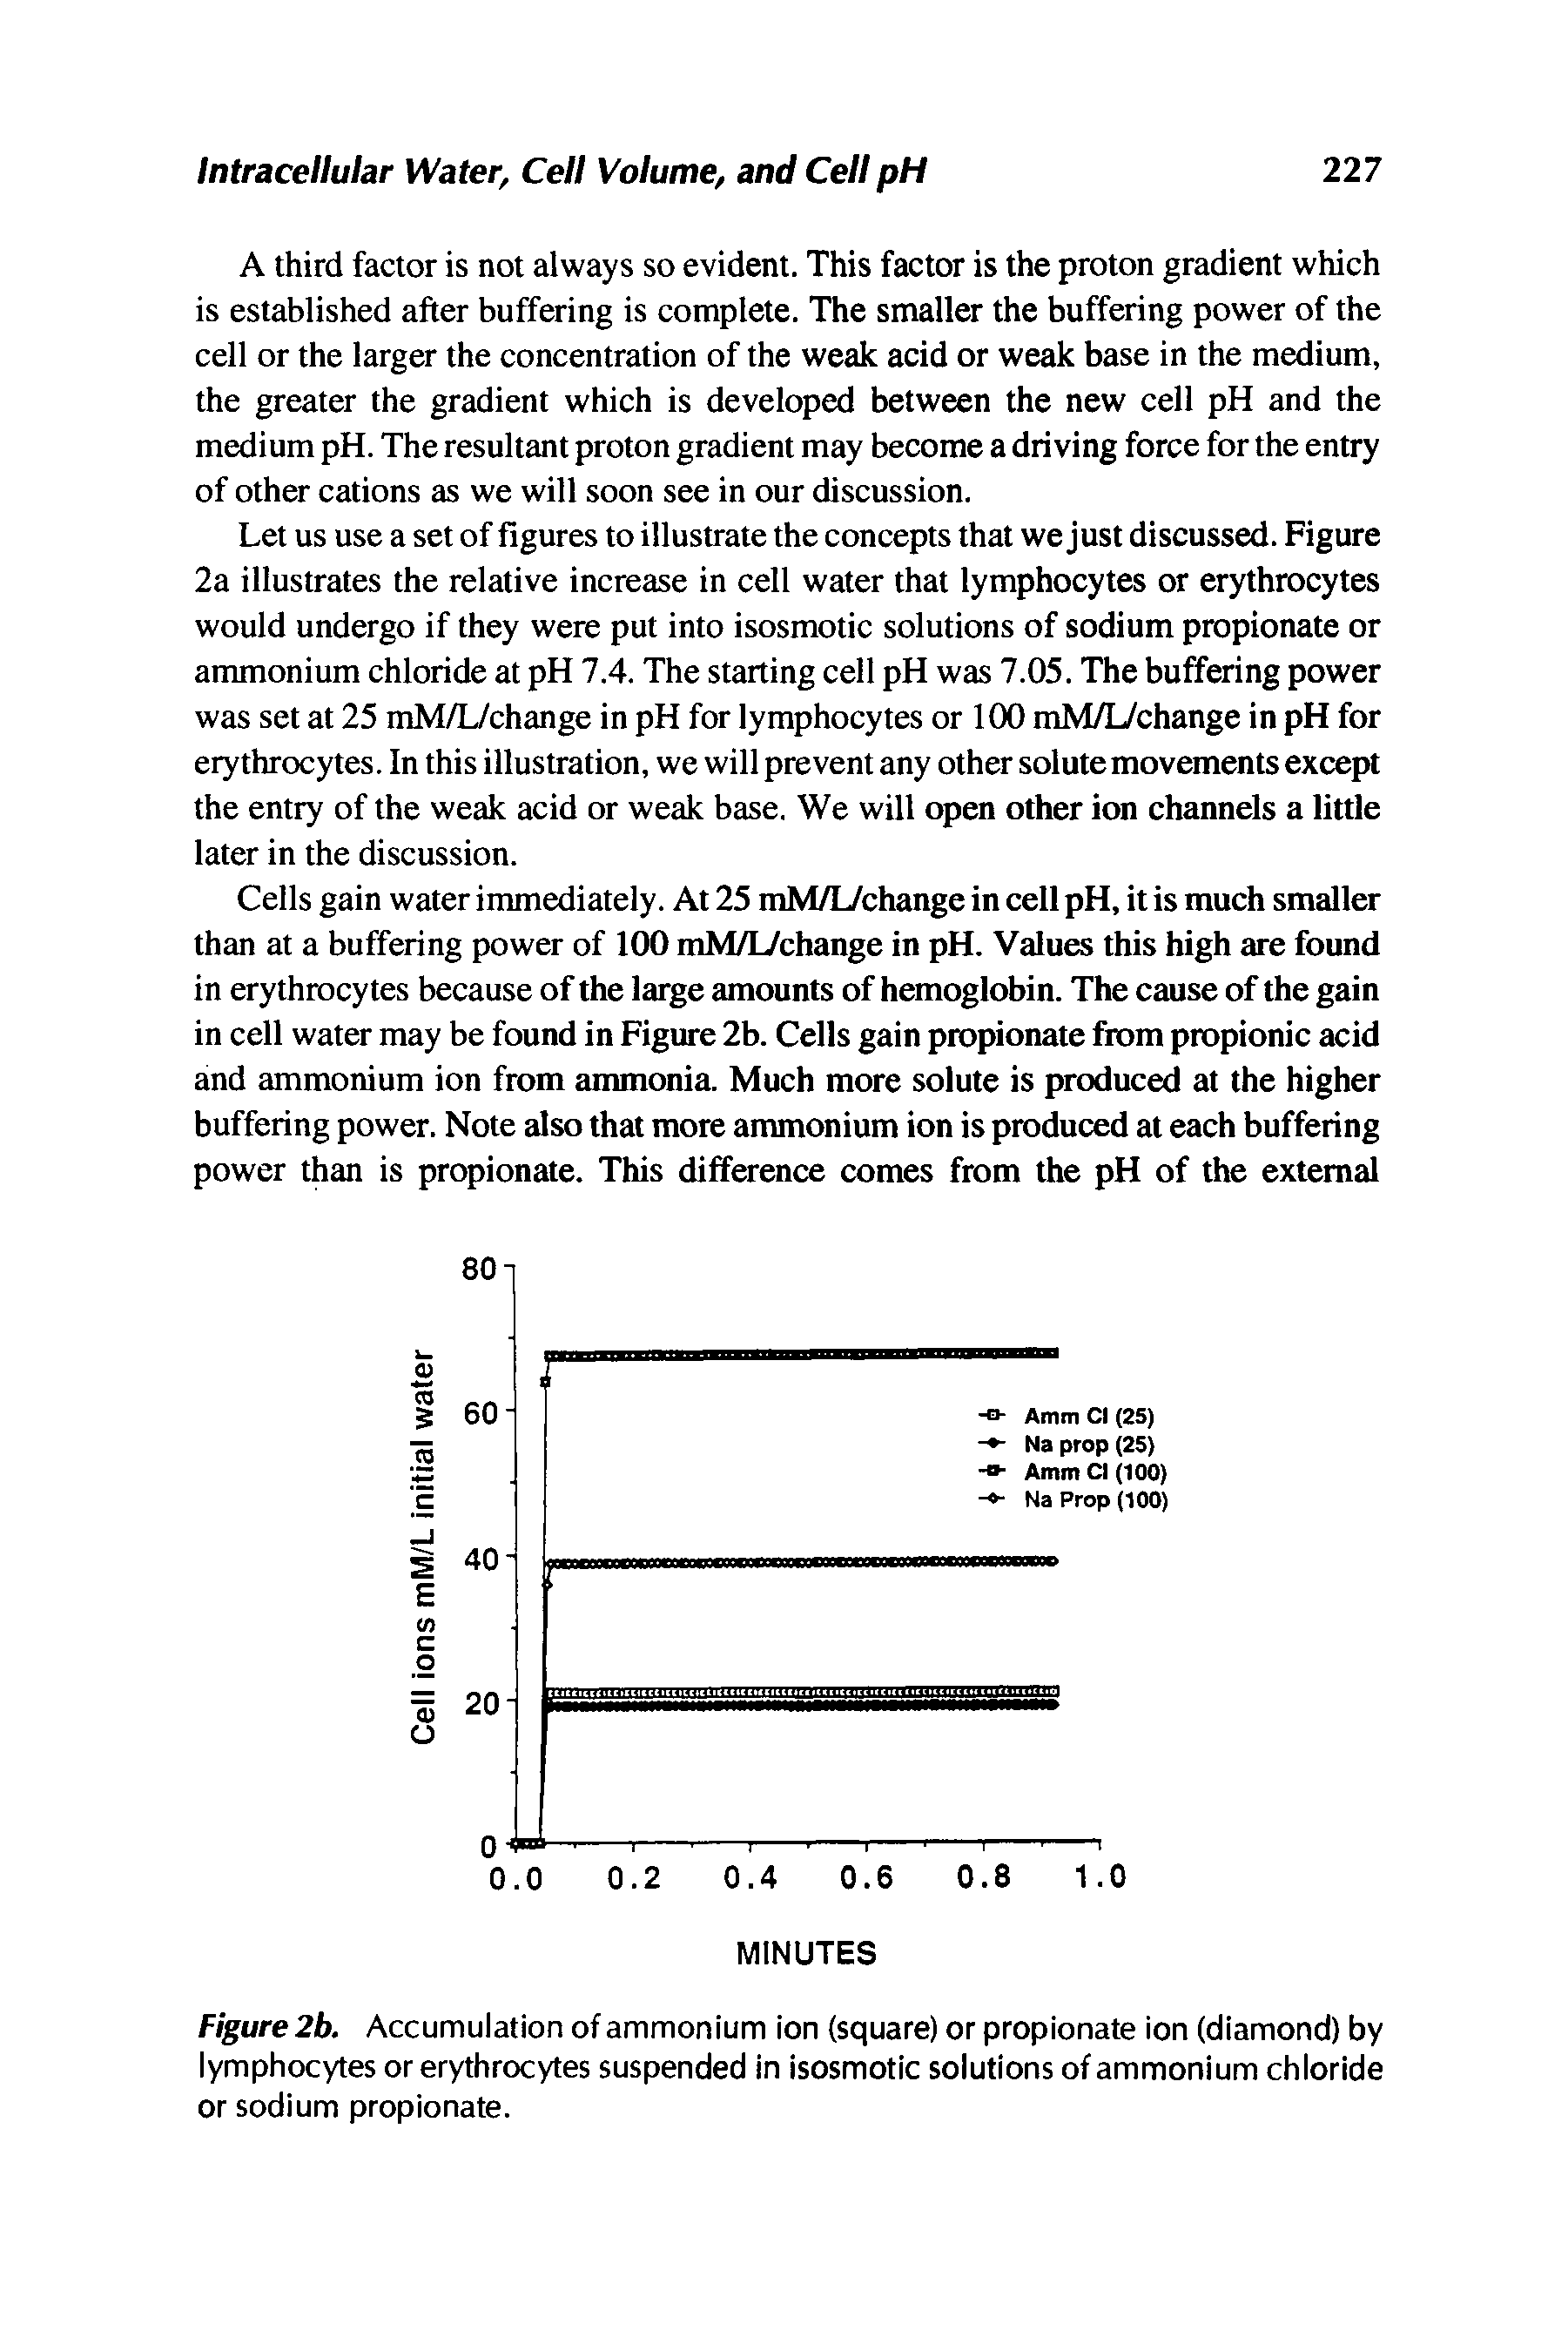 Figure 2b. Accumulation of ammonium ion (square) or propionate ion (diamond) by lymphocytes or erythrocytes suspended in isosmotic solutions of ammonium chloride or sodium propionate.